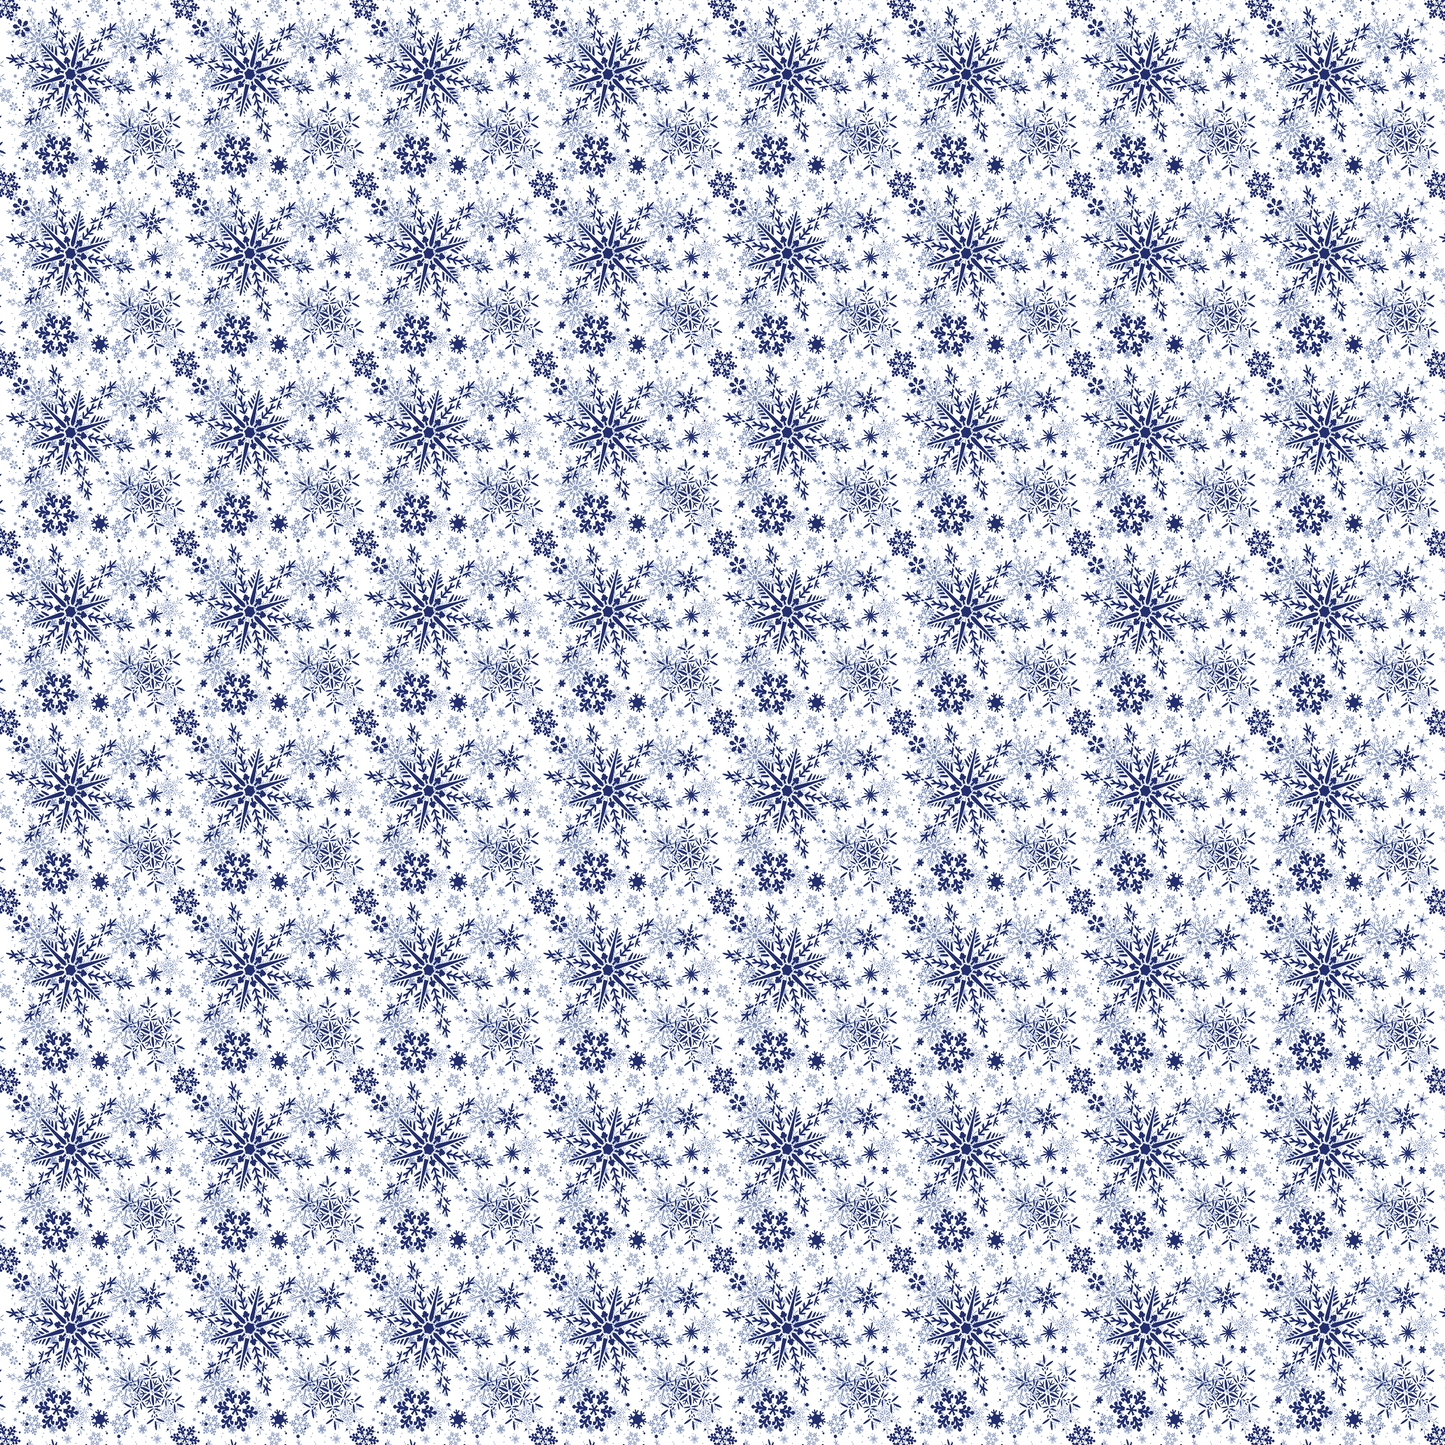 Blue Snowflakes on a White Background 005